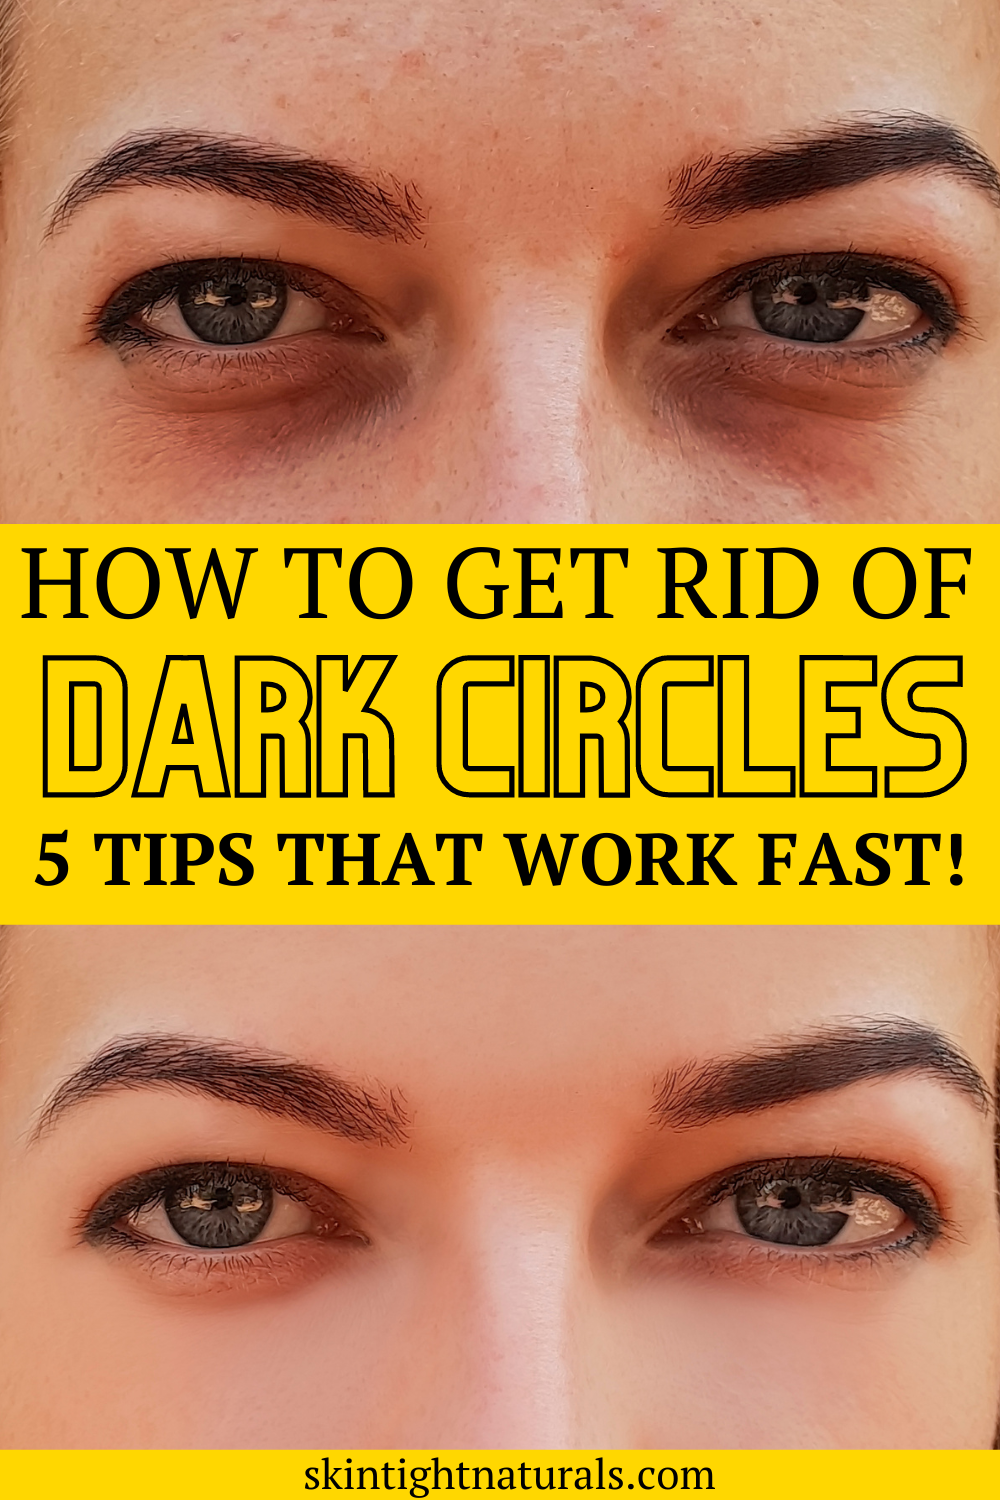 How To Get Rid Of Dark Under-Eye Circles